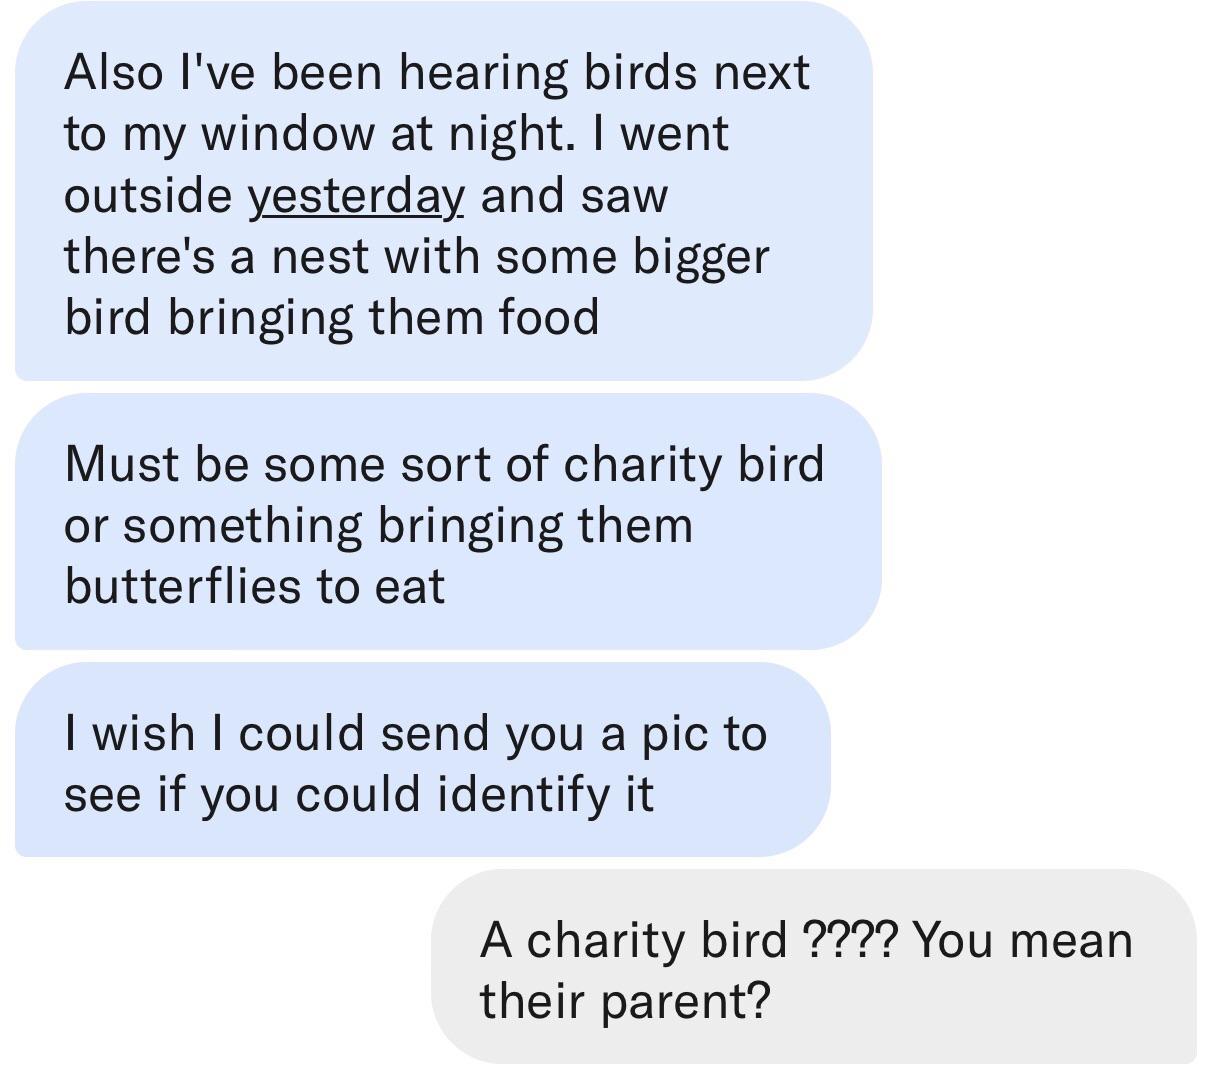 Charity birds are very nice.